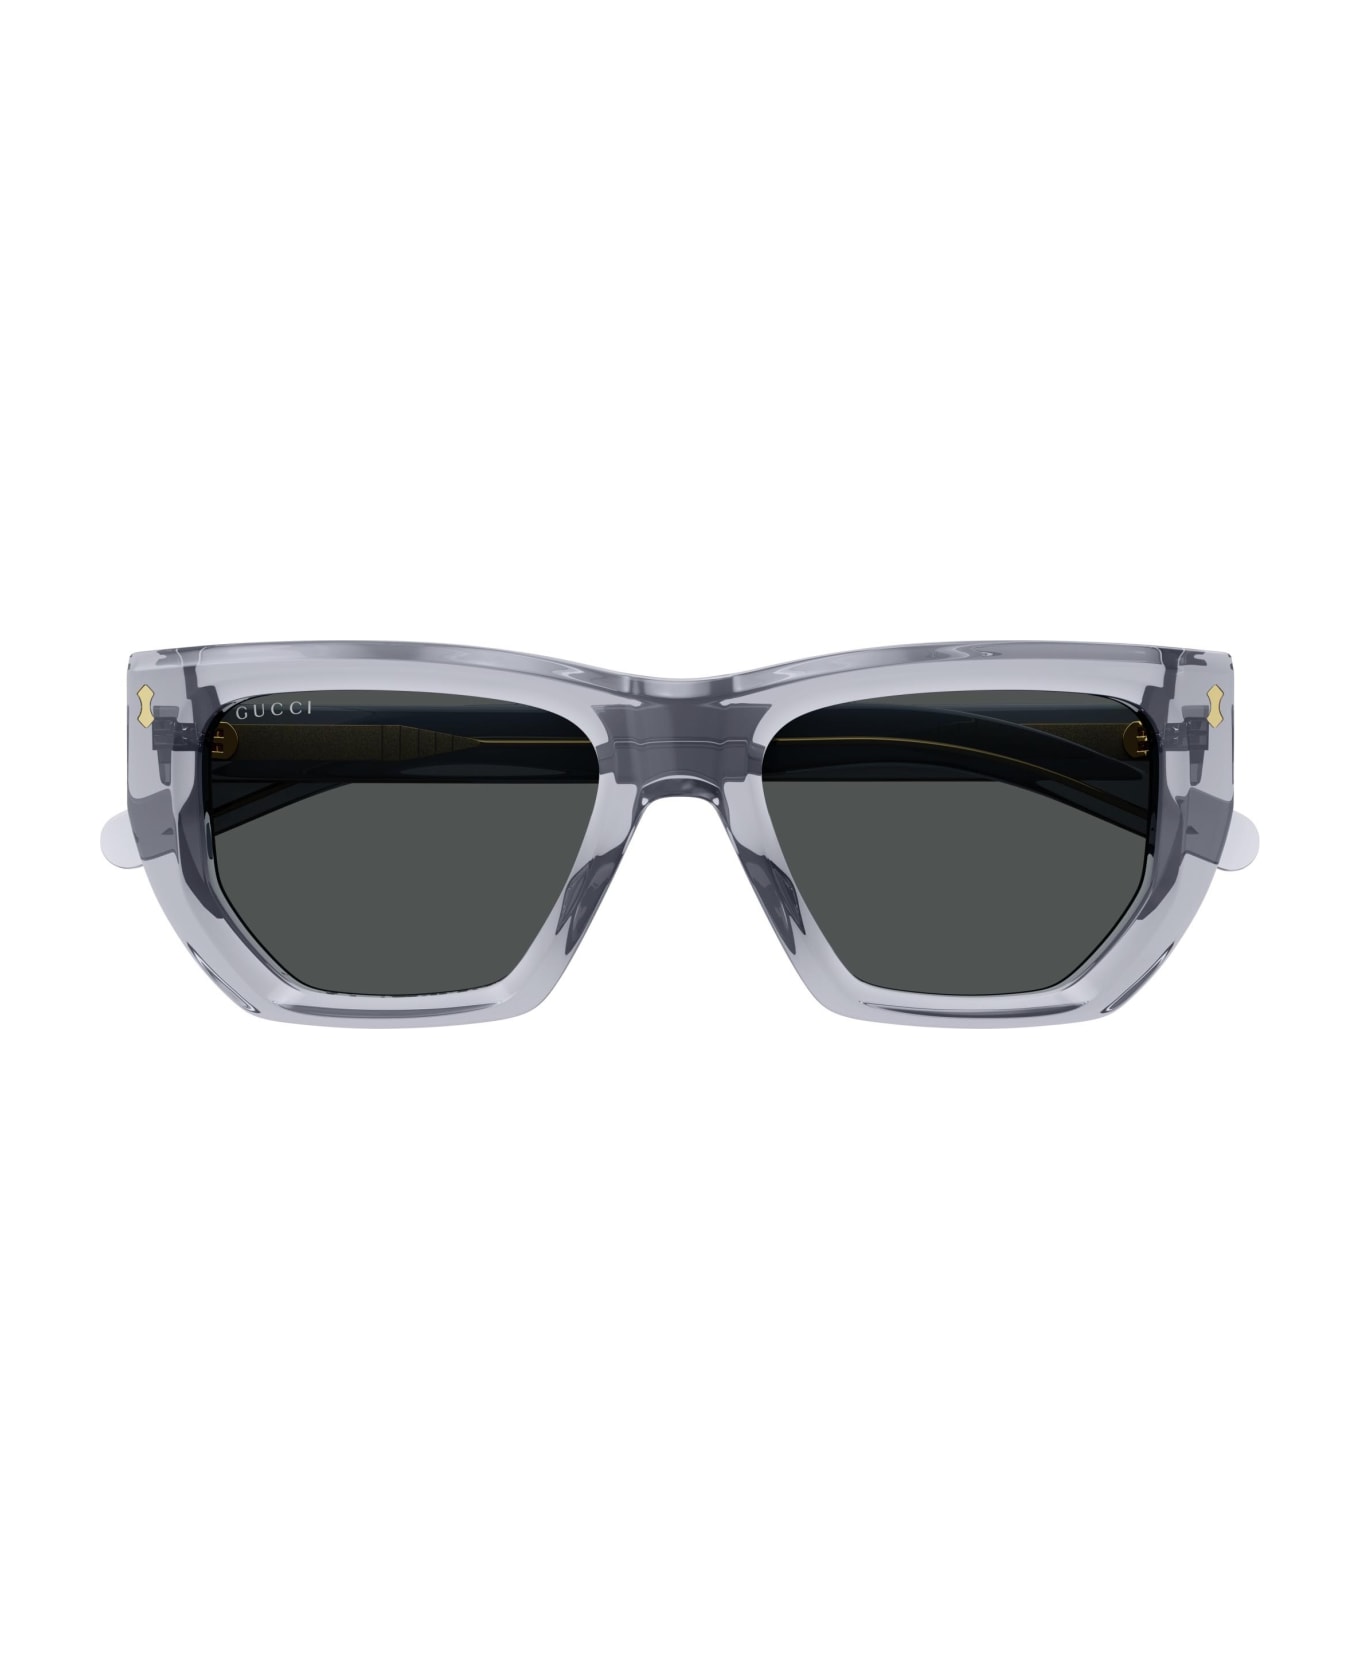 Gucci Eyewear Sunglasses - Grigio/Grigio